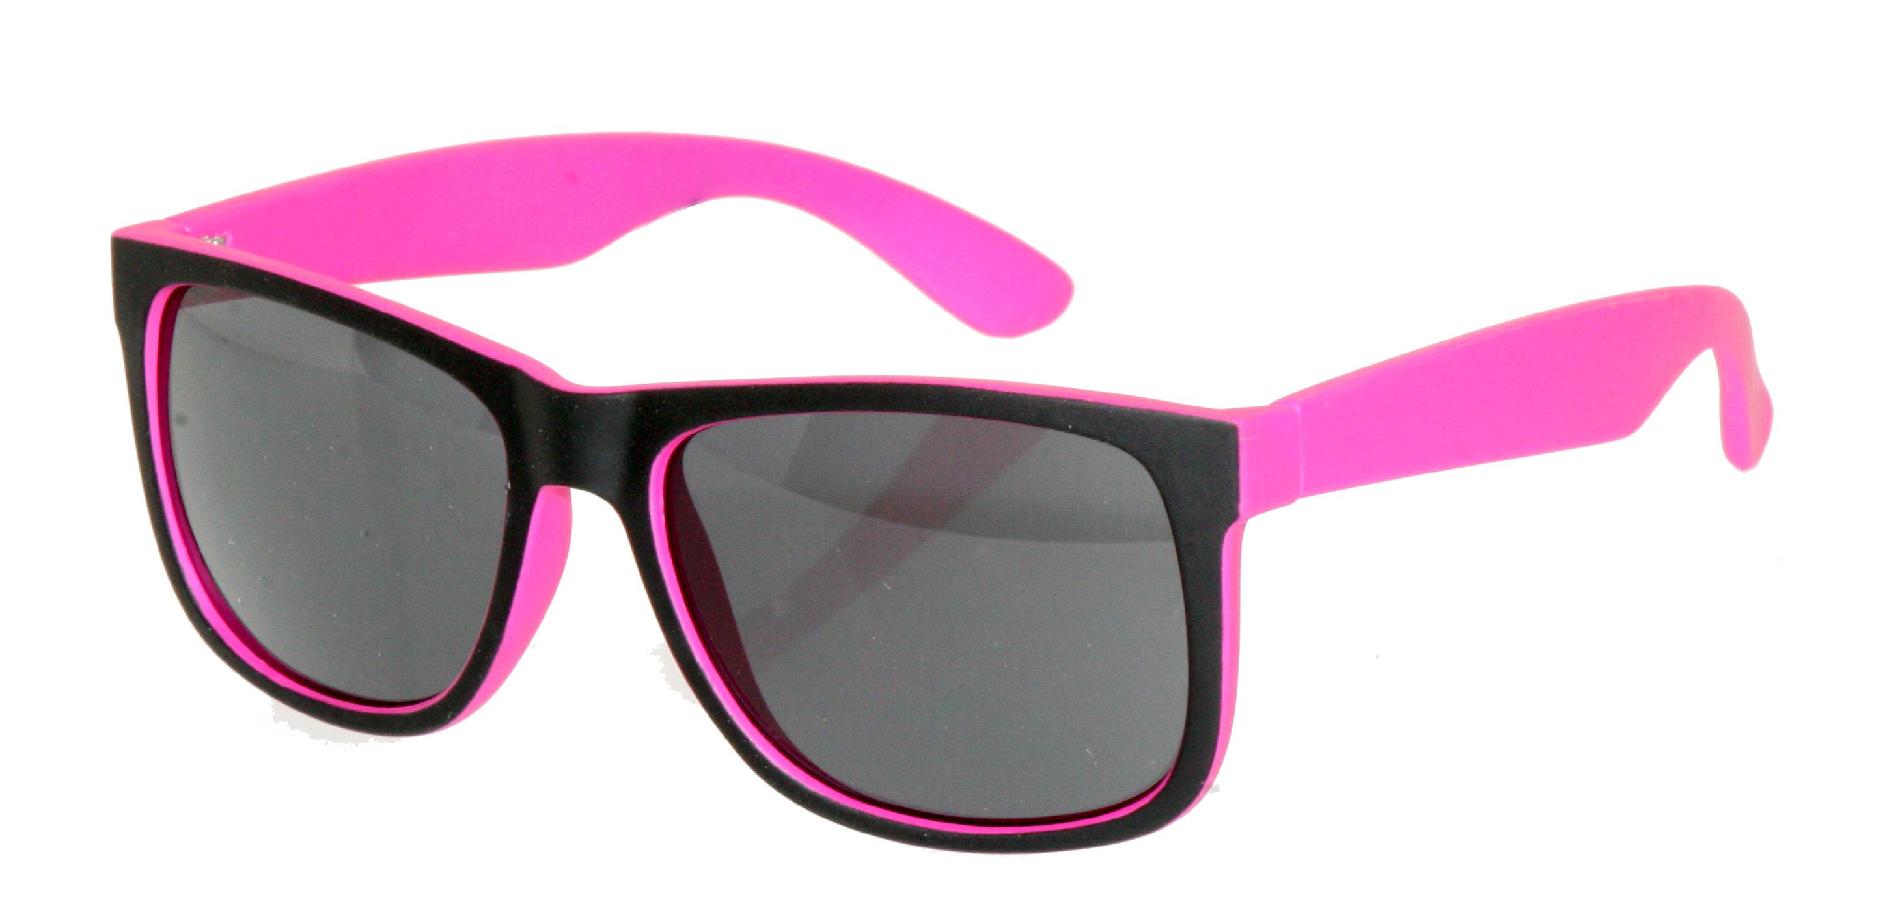 Joe Boxer Women's Retro-Style Sunglasses - Two-Tone